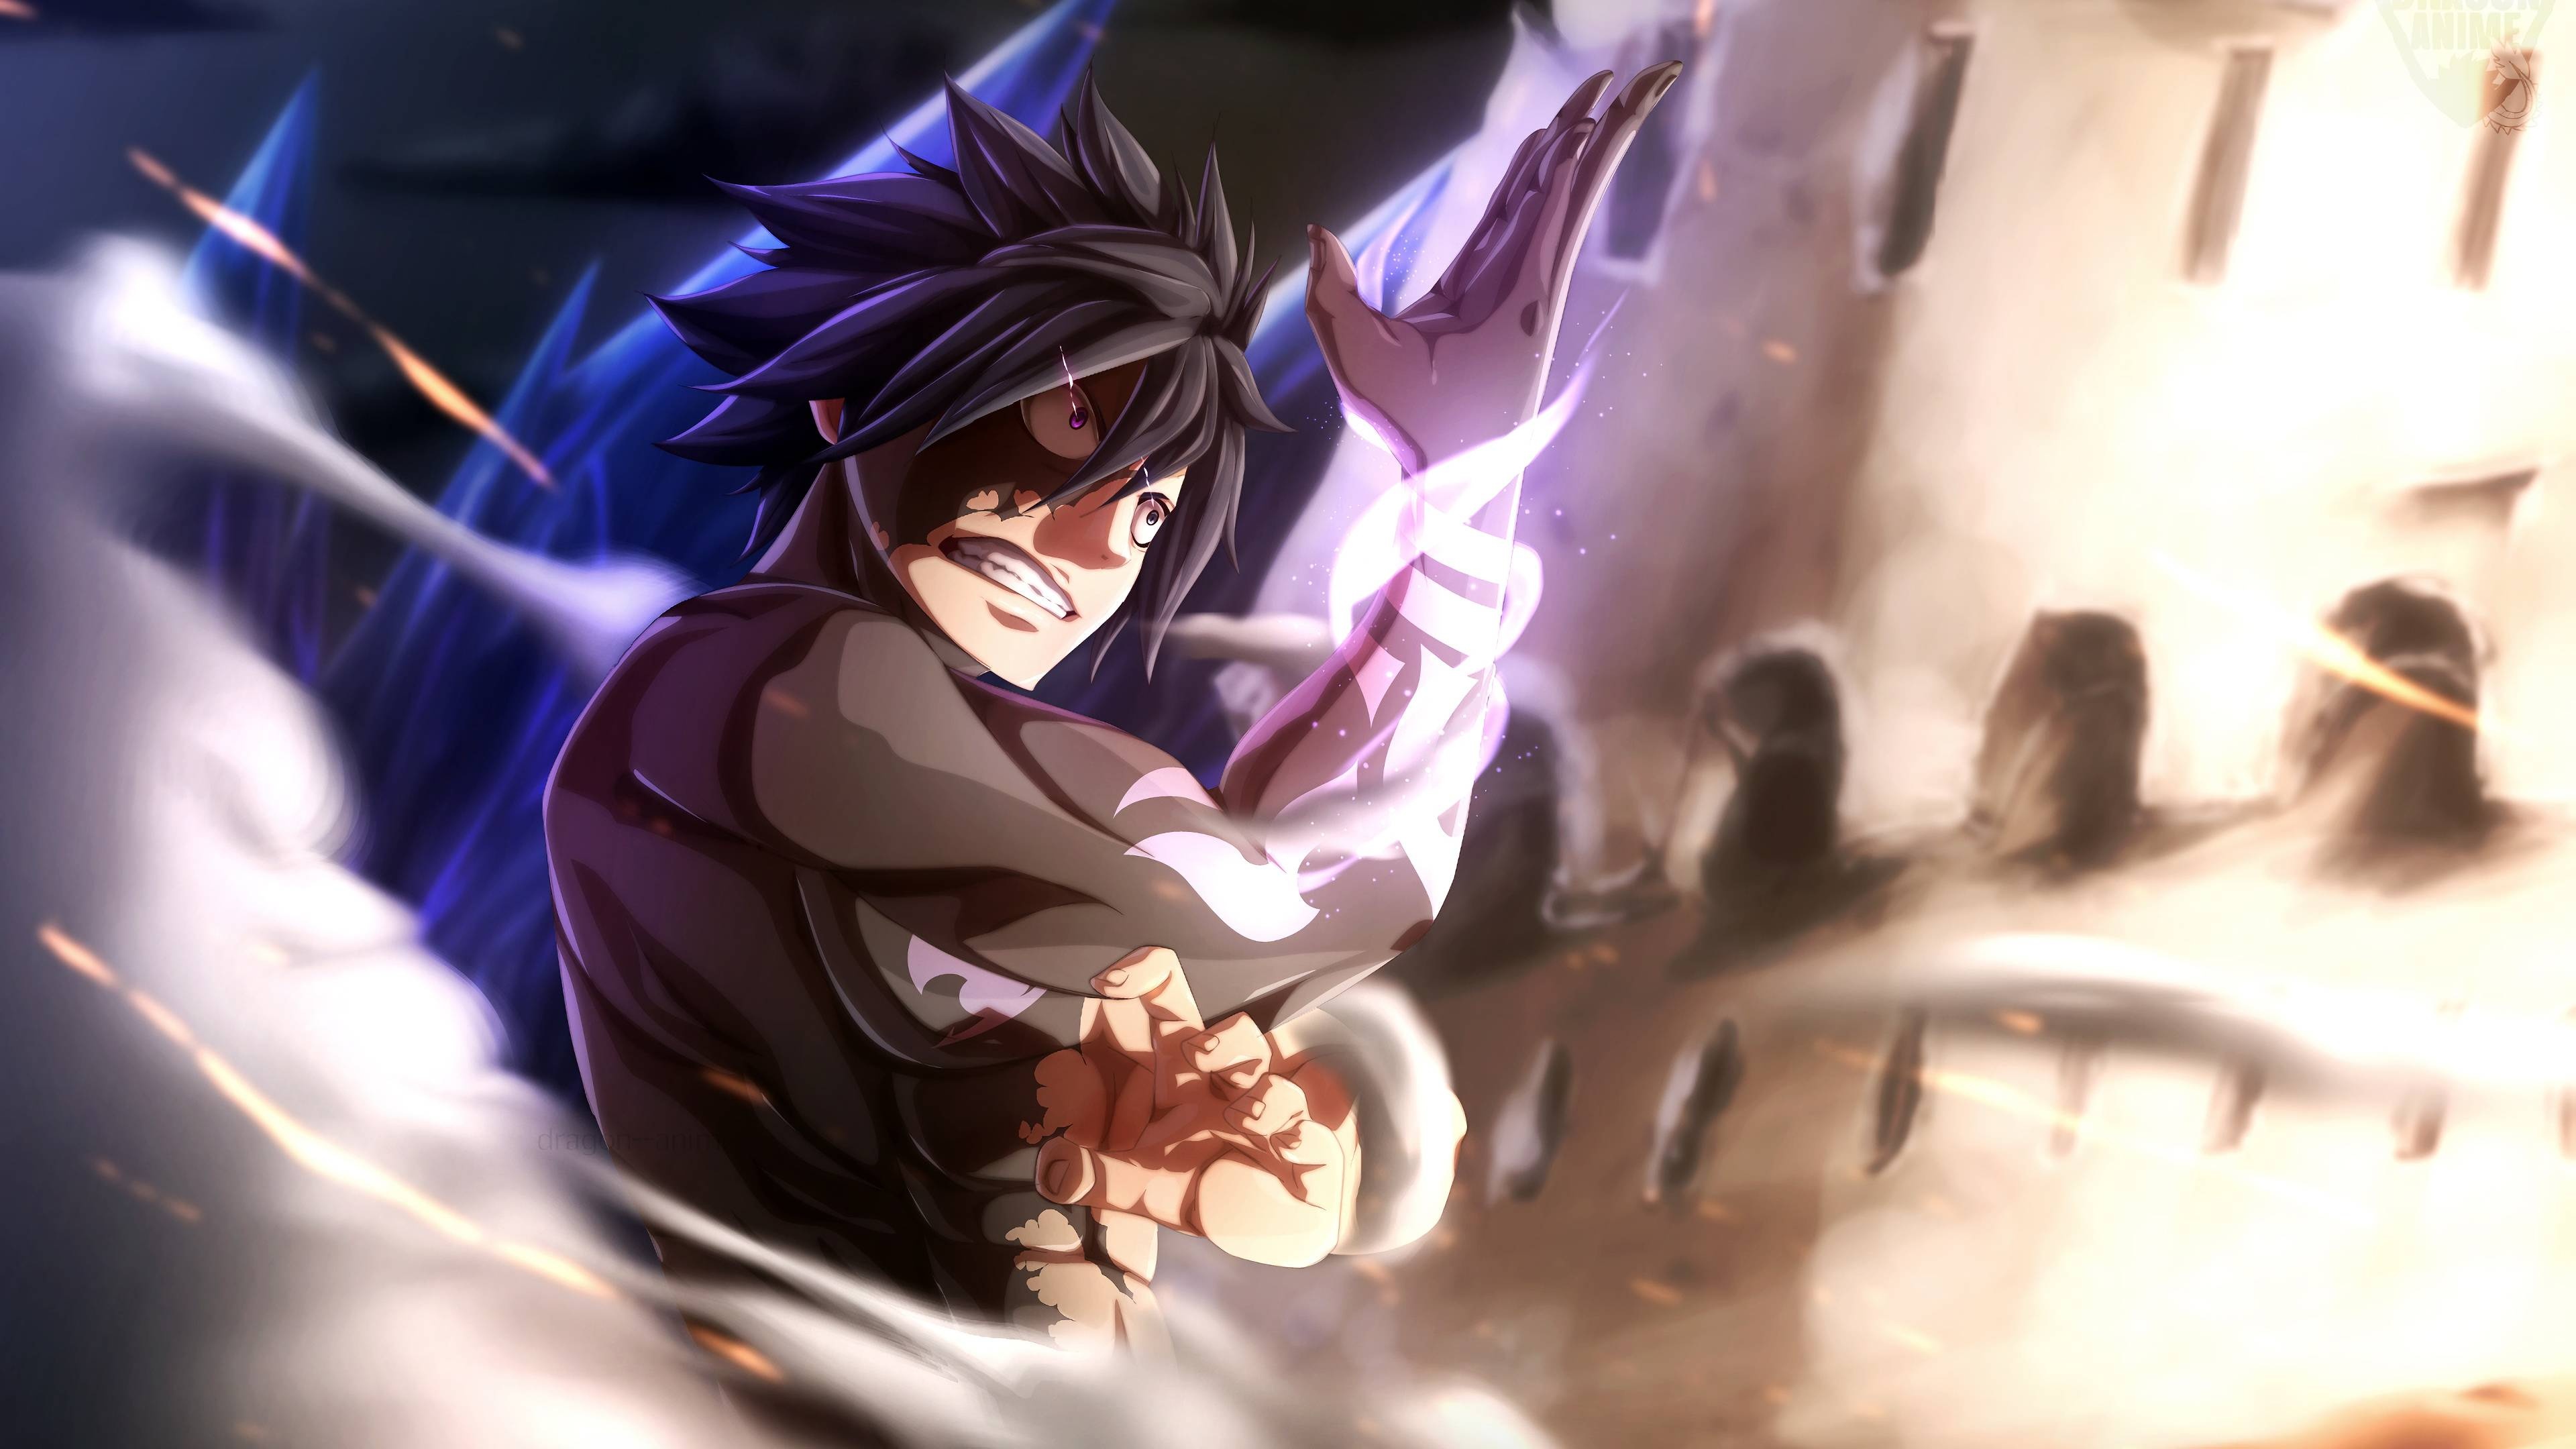 Gray Fullbuster, Anime character, Ice magic, Powerful warrior, 3840x2160 4K Desktop